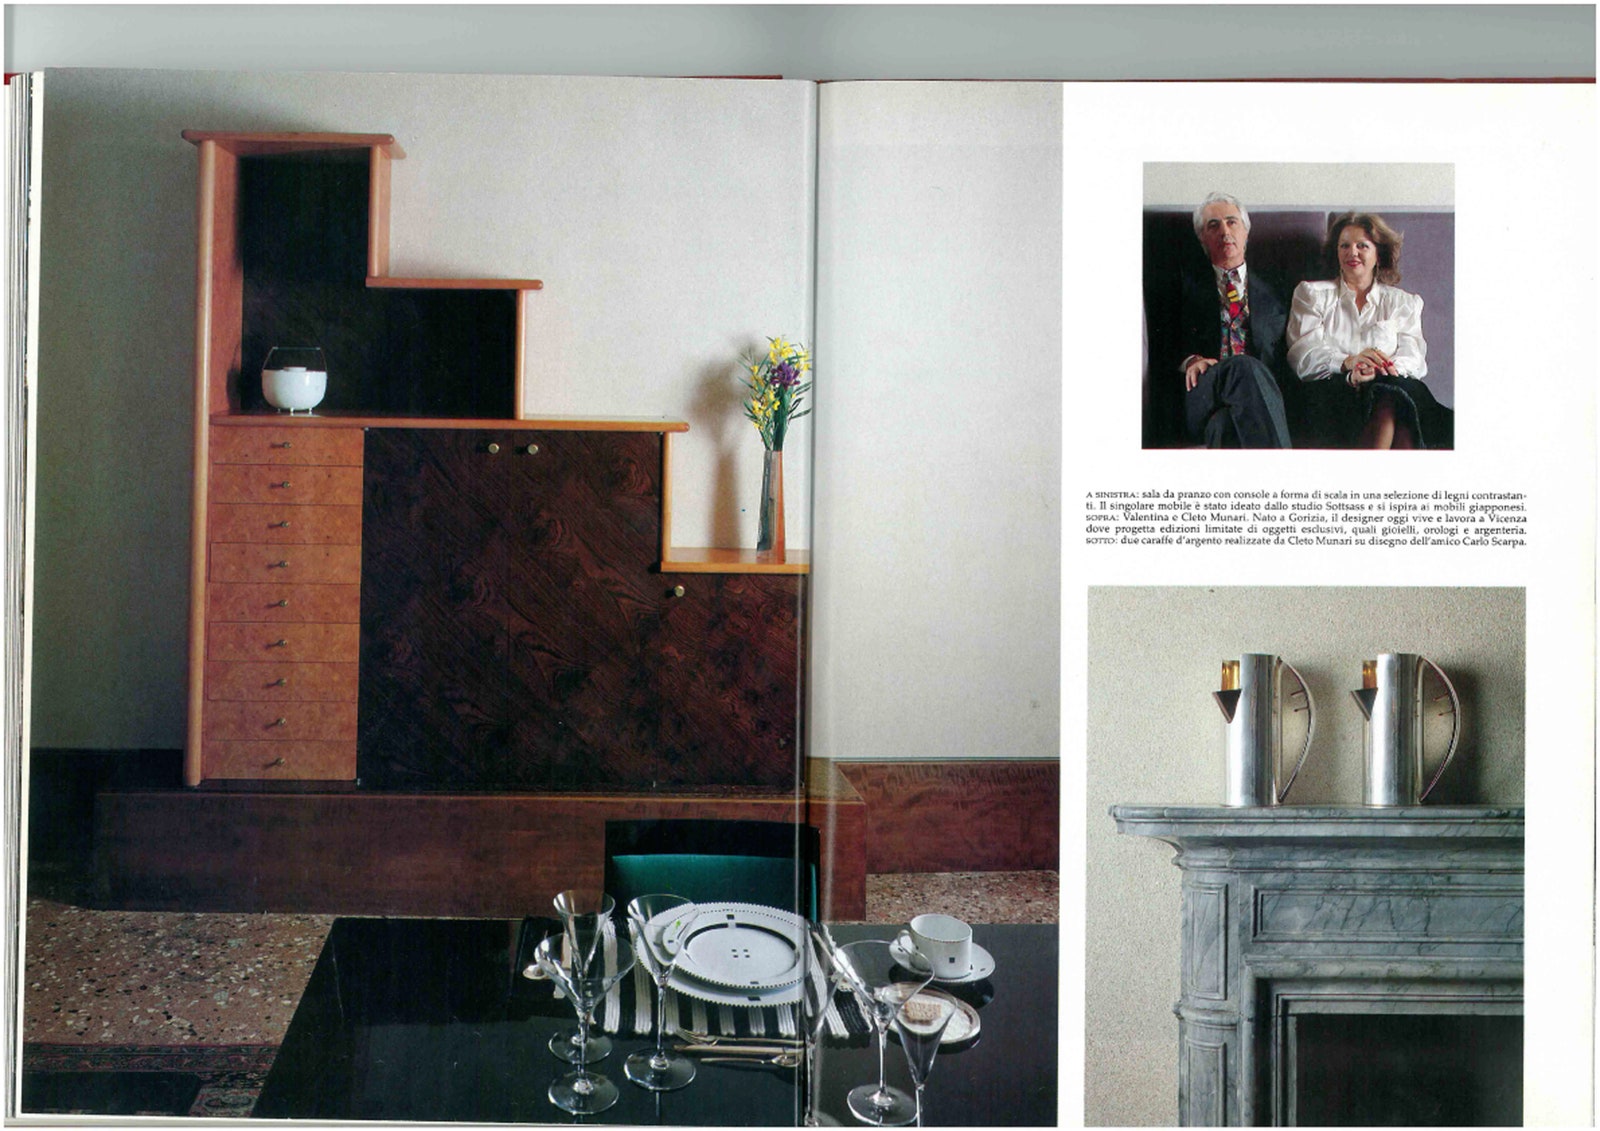 Квартира Клето Мунари по дизайну Этторе Соттсасса публикации из журнала AD Italia 1987.